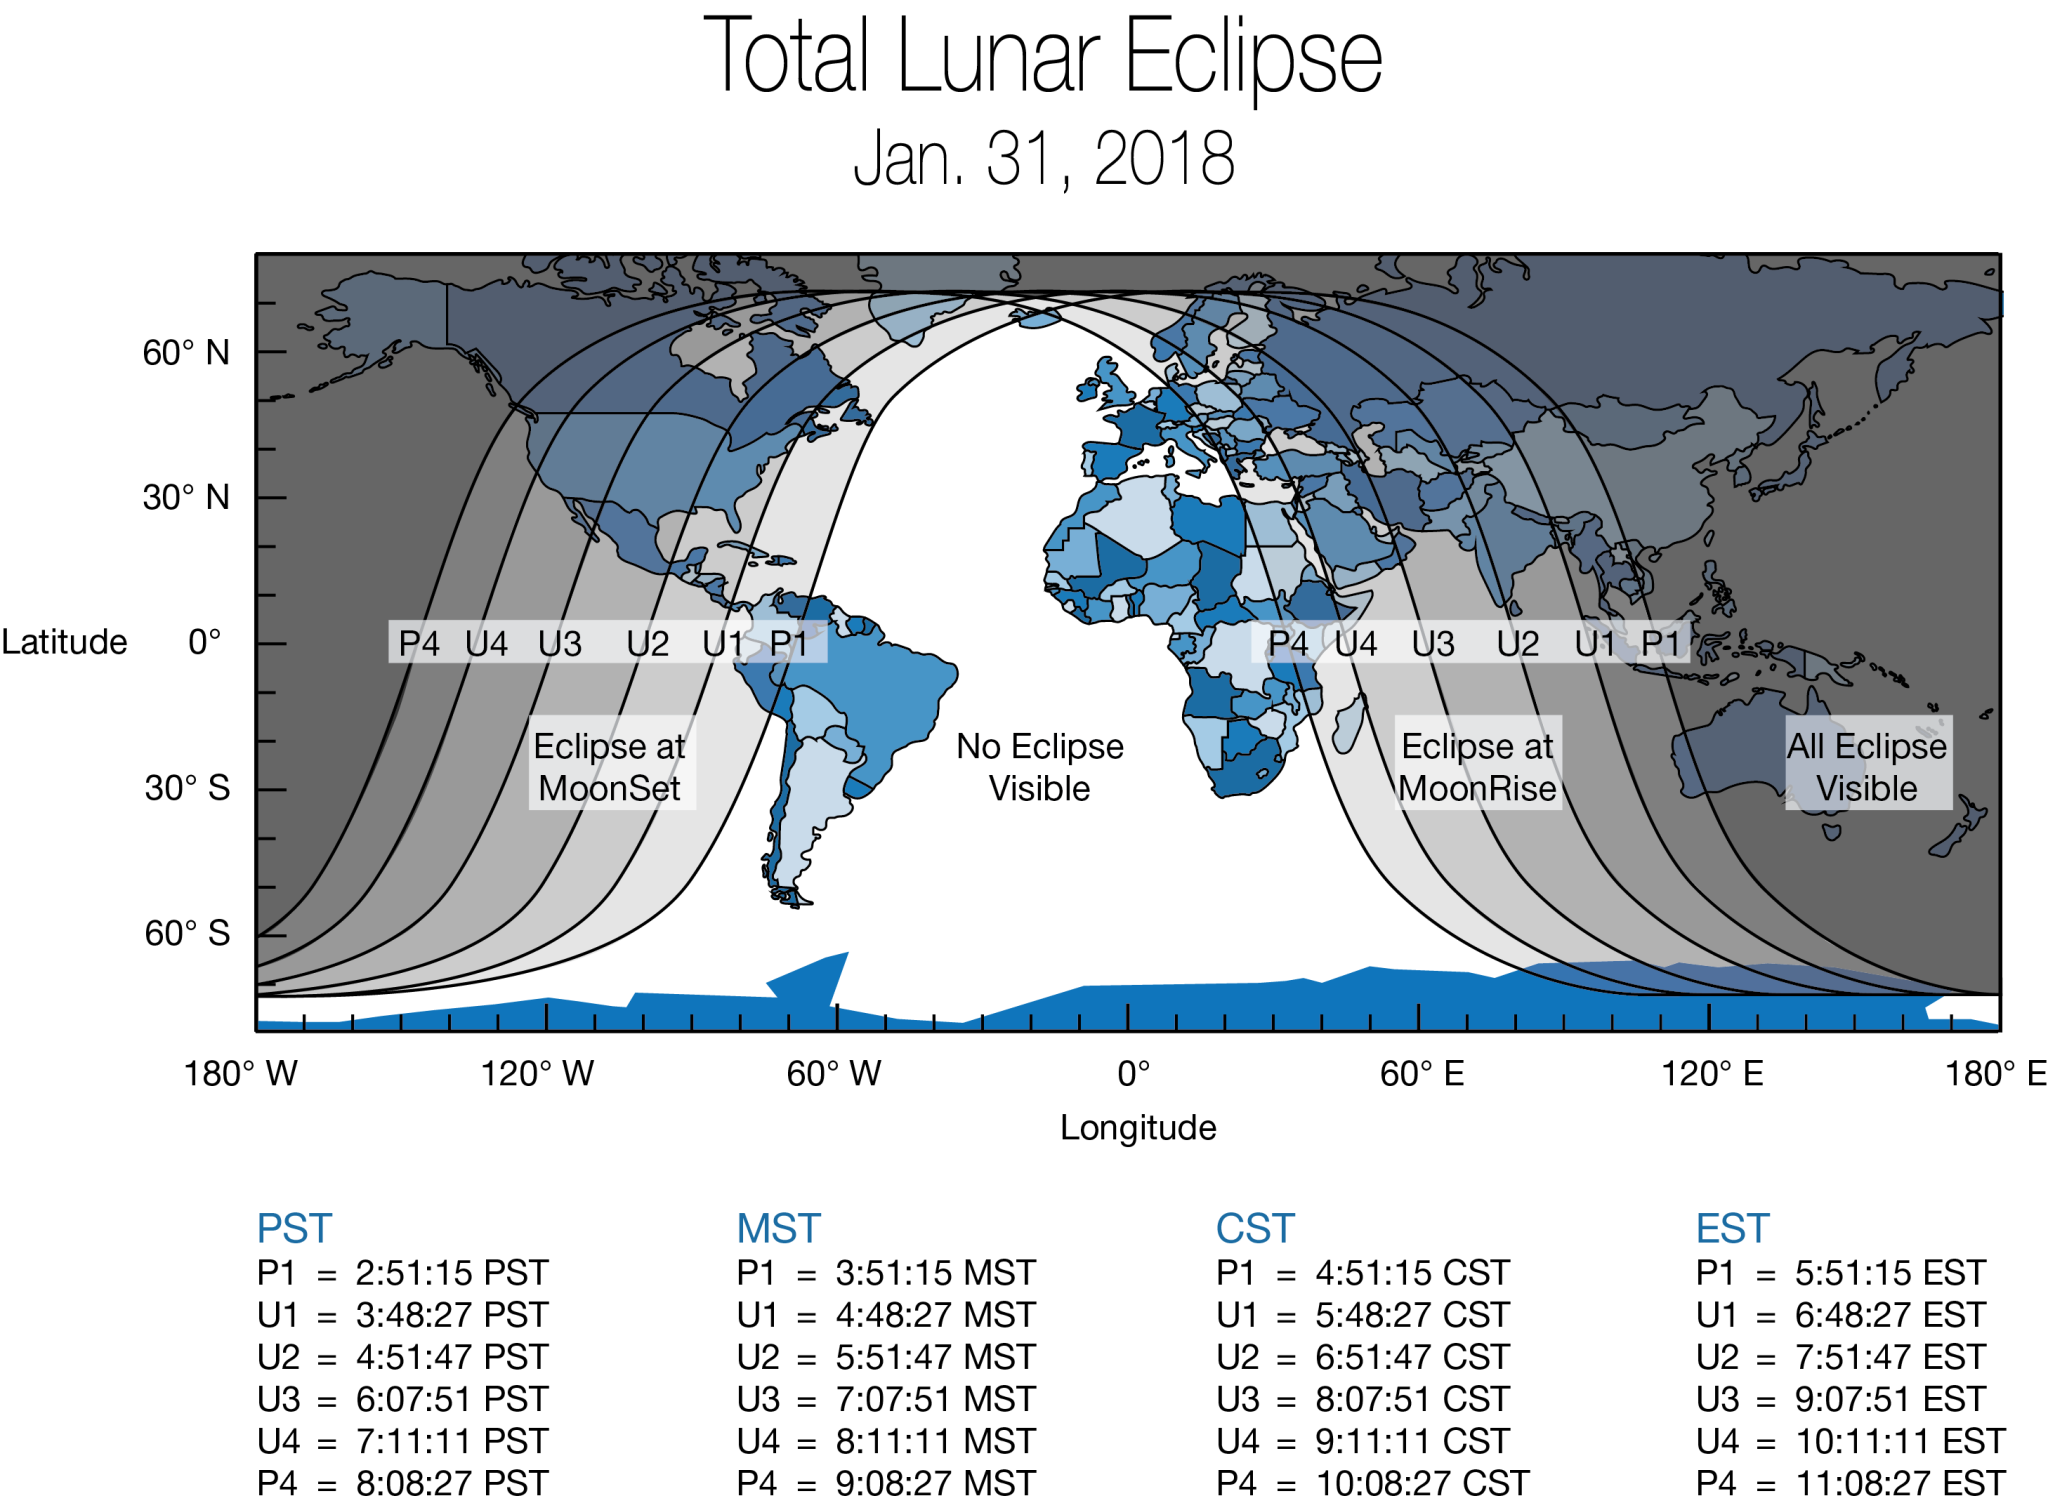 Total Lunar Eclipse - Jan. 31, 2018